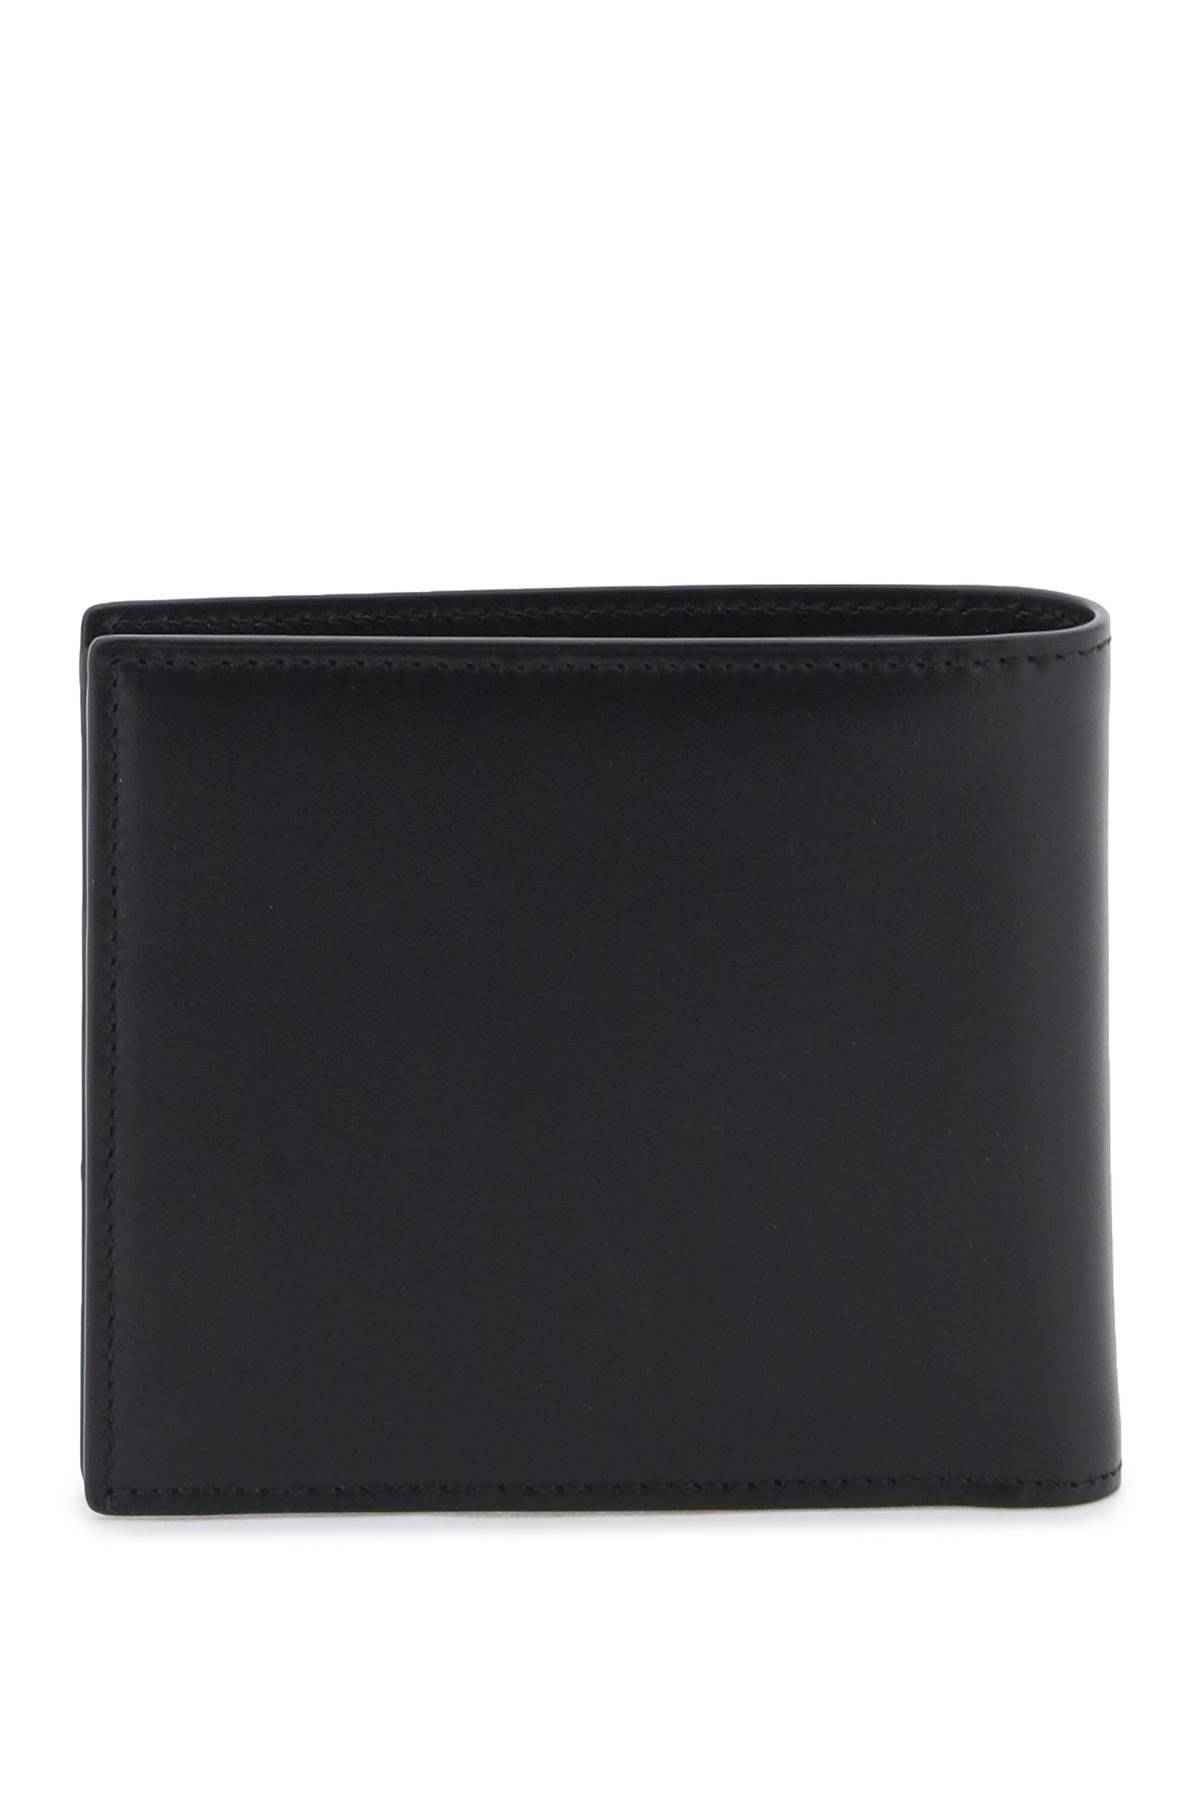 Dolce & gabbana leather bi-fold wallet-2